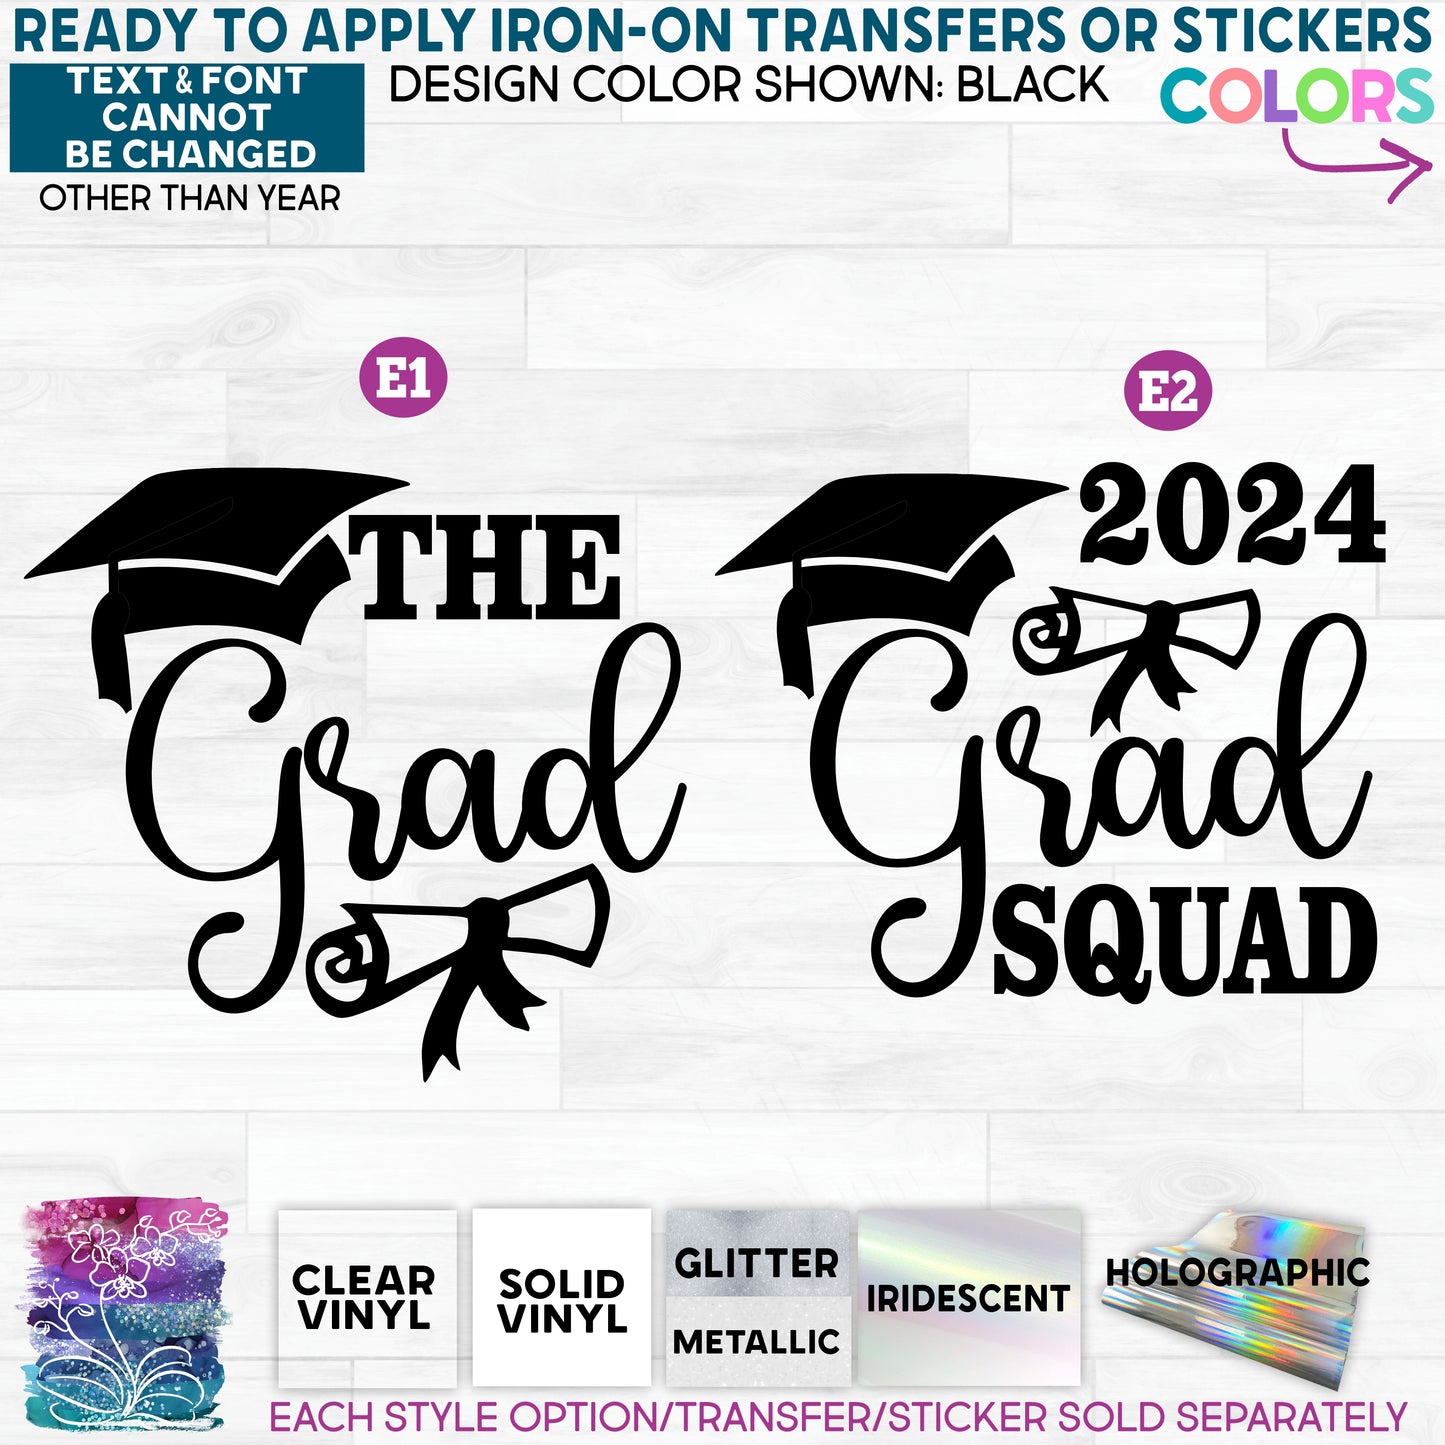 (s151-3E) 2024 Year The Grad Squad Glitter or Vinyl Iron-On Transfer or Sticker